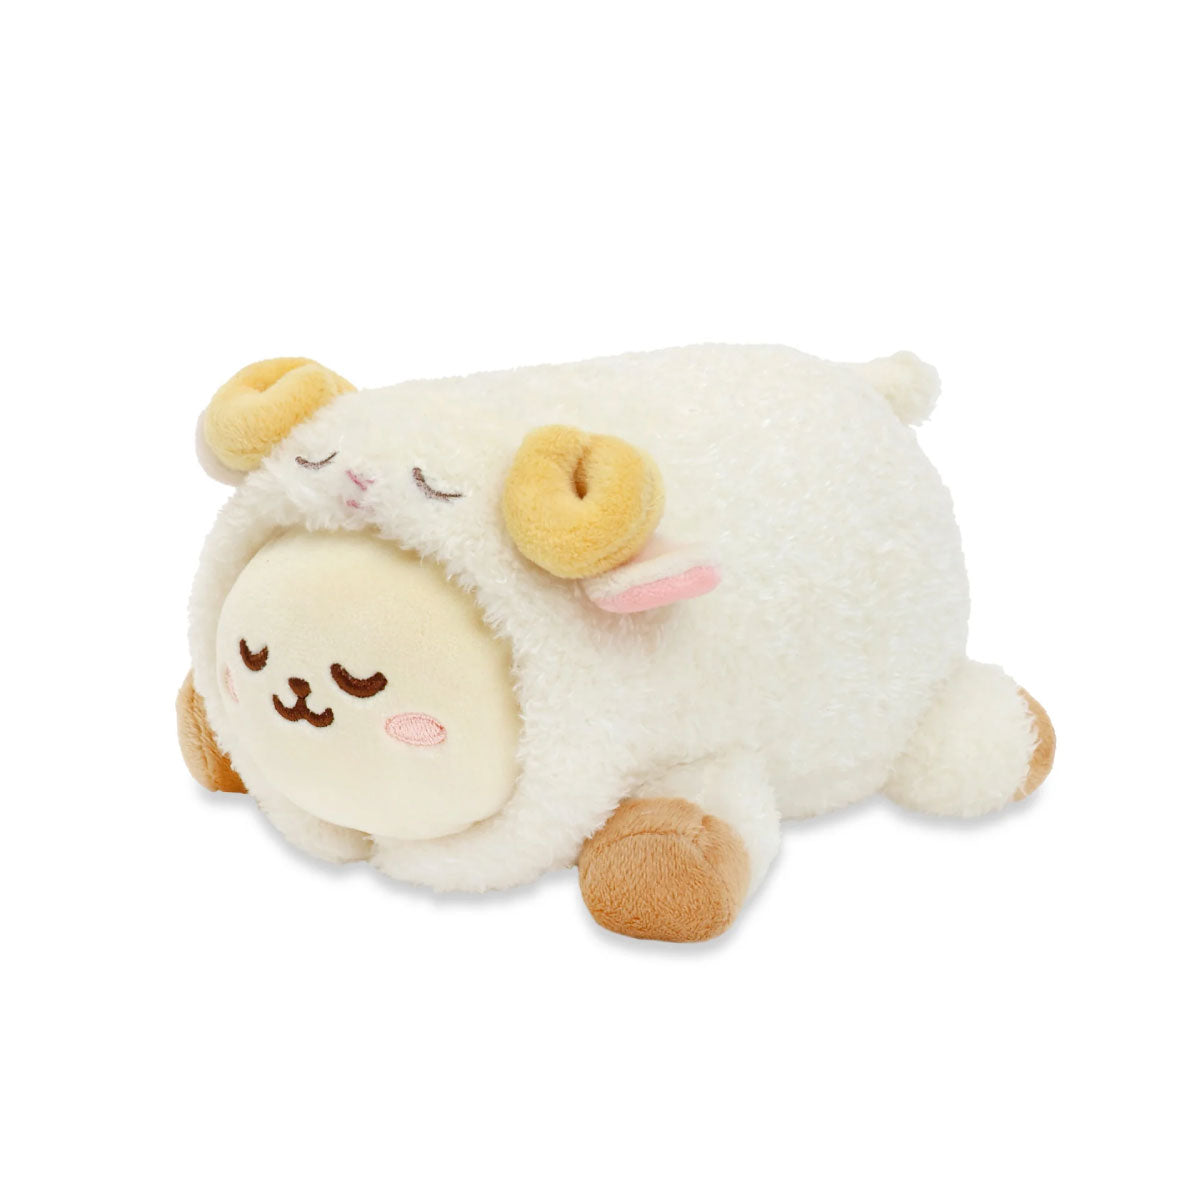 Anirollz in Animals 6” Small Blanket Plush Sheep Bunniroll